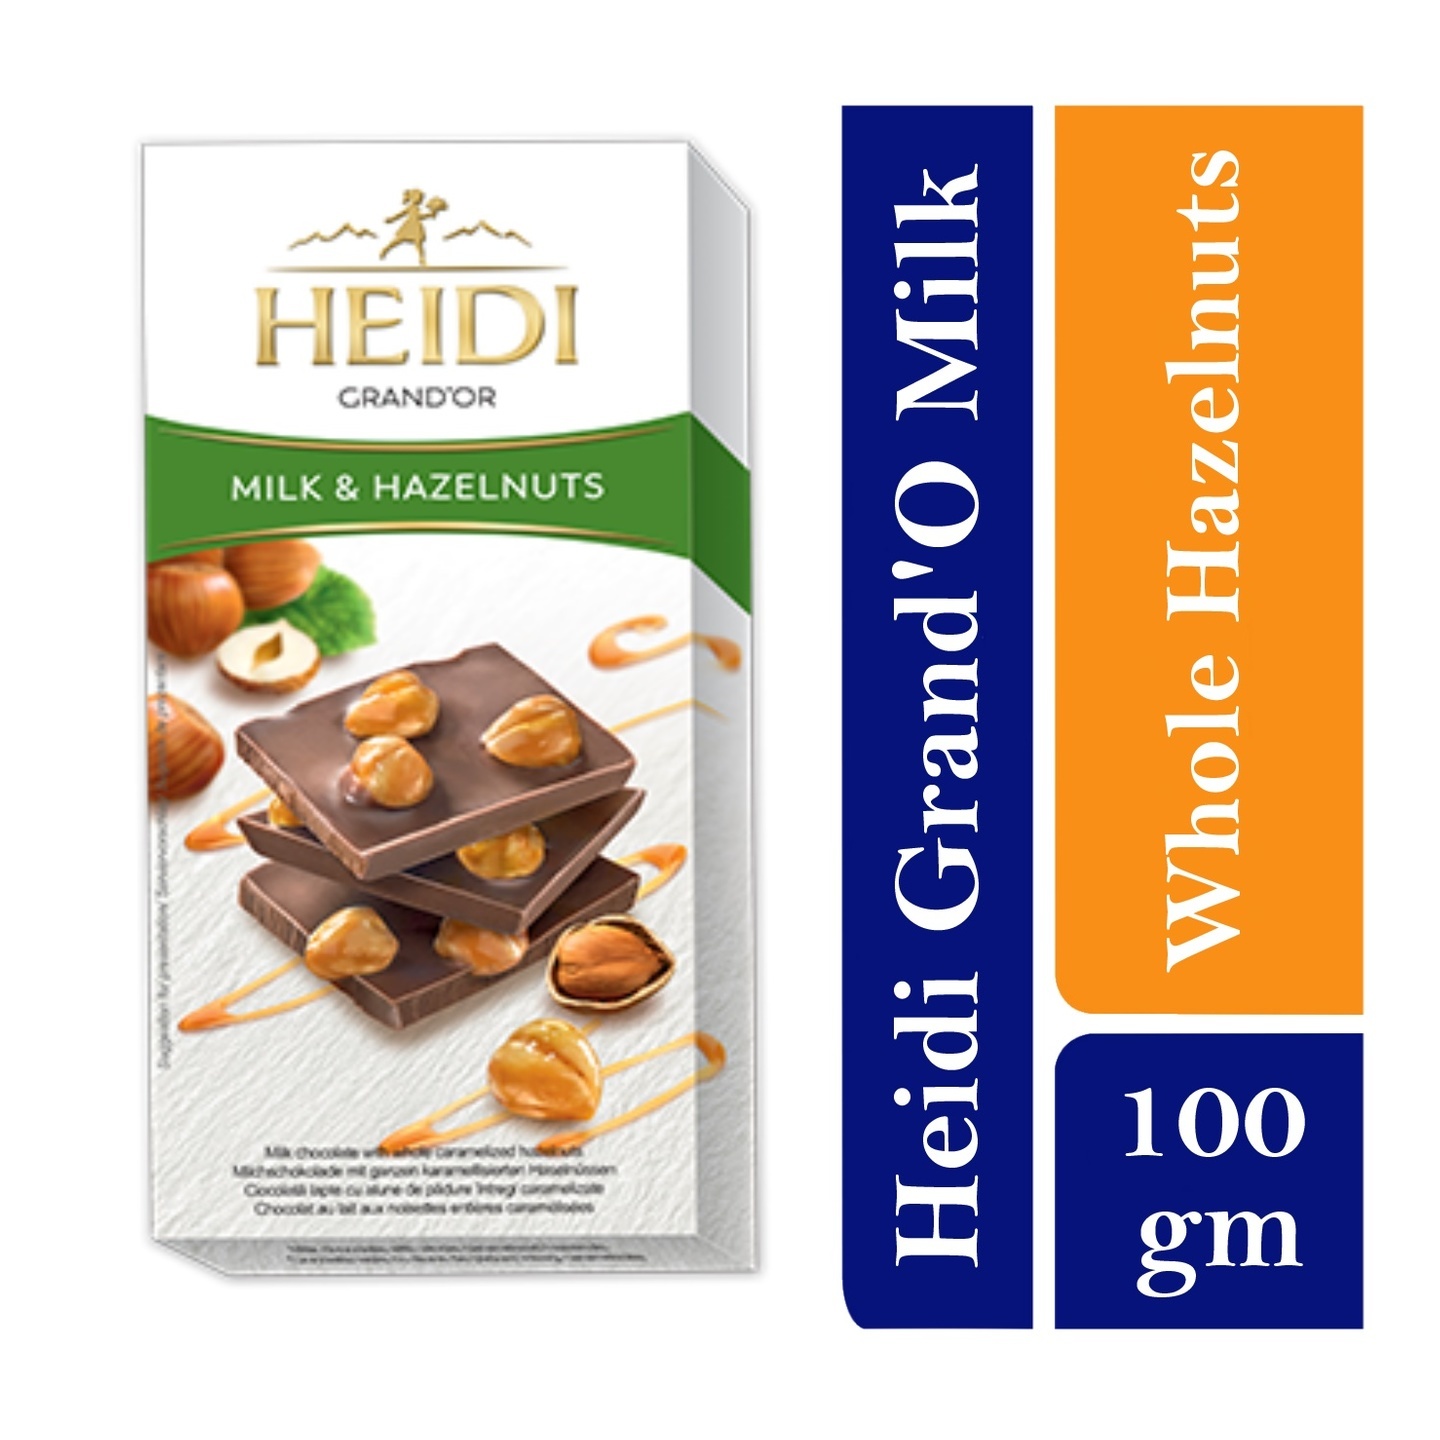 Heidi Grand Or  Milk Chocolate with whole caramelized Hazelnuts